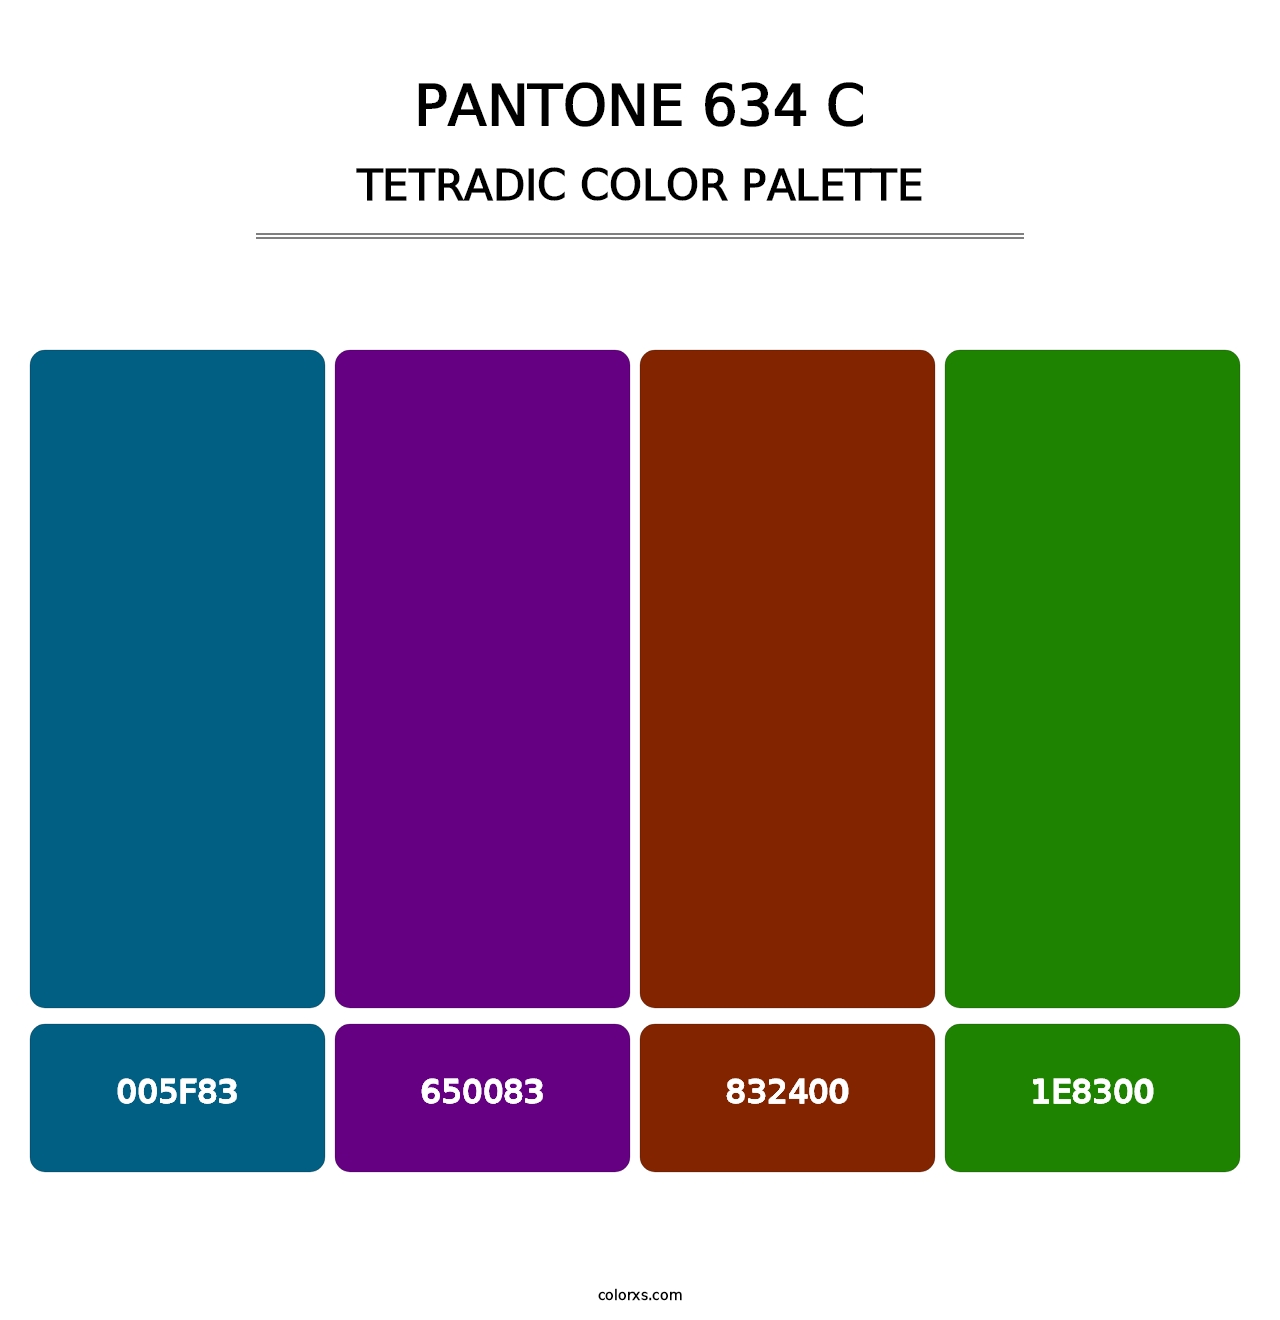 PANTONE 634 C - Tetradic Color Palette